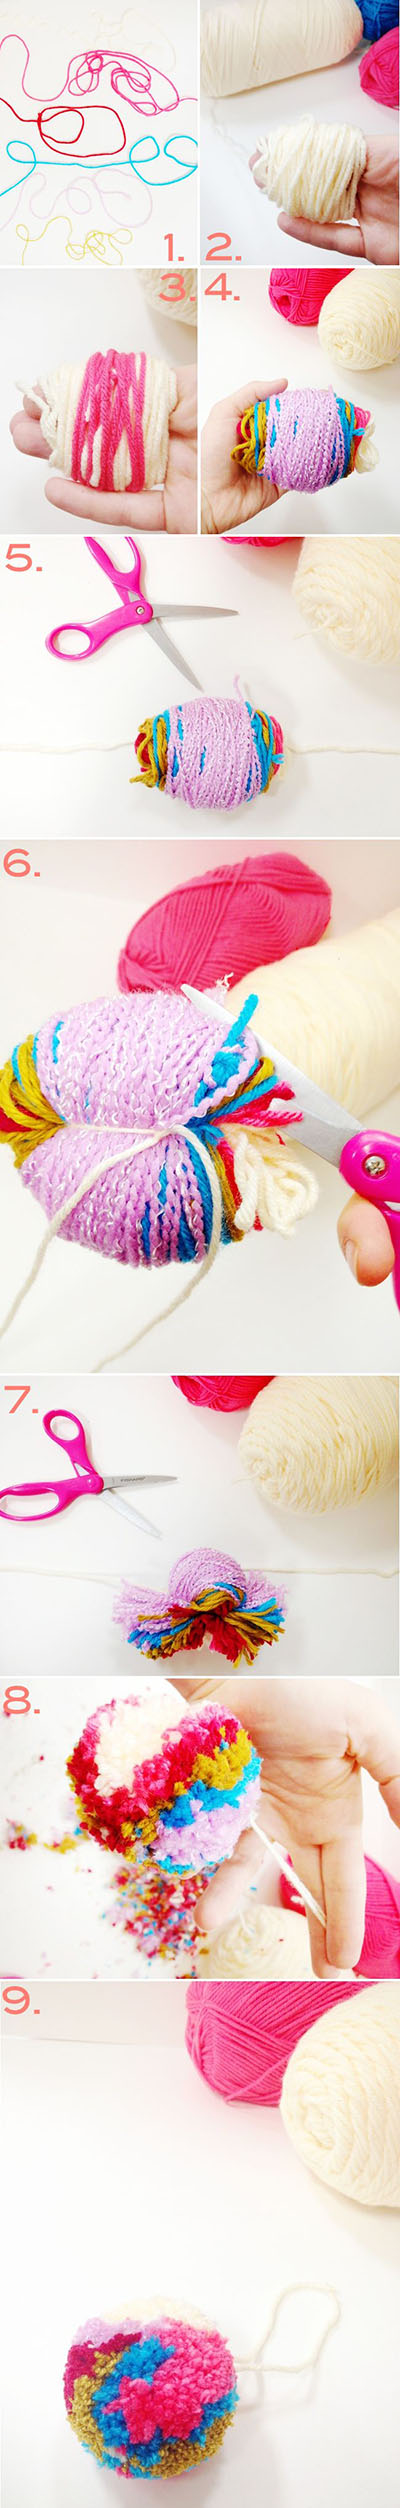 12  colorful yarn pom pomcdf9